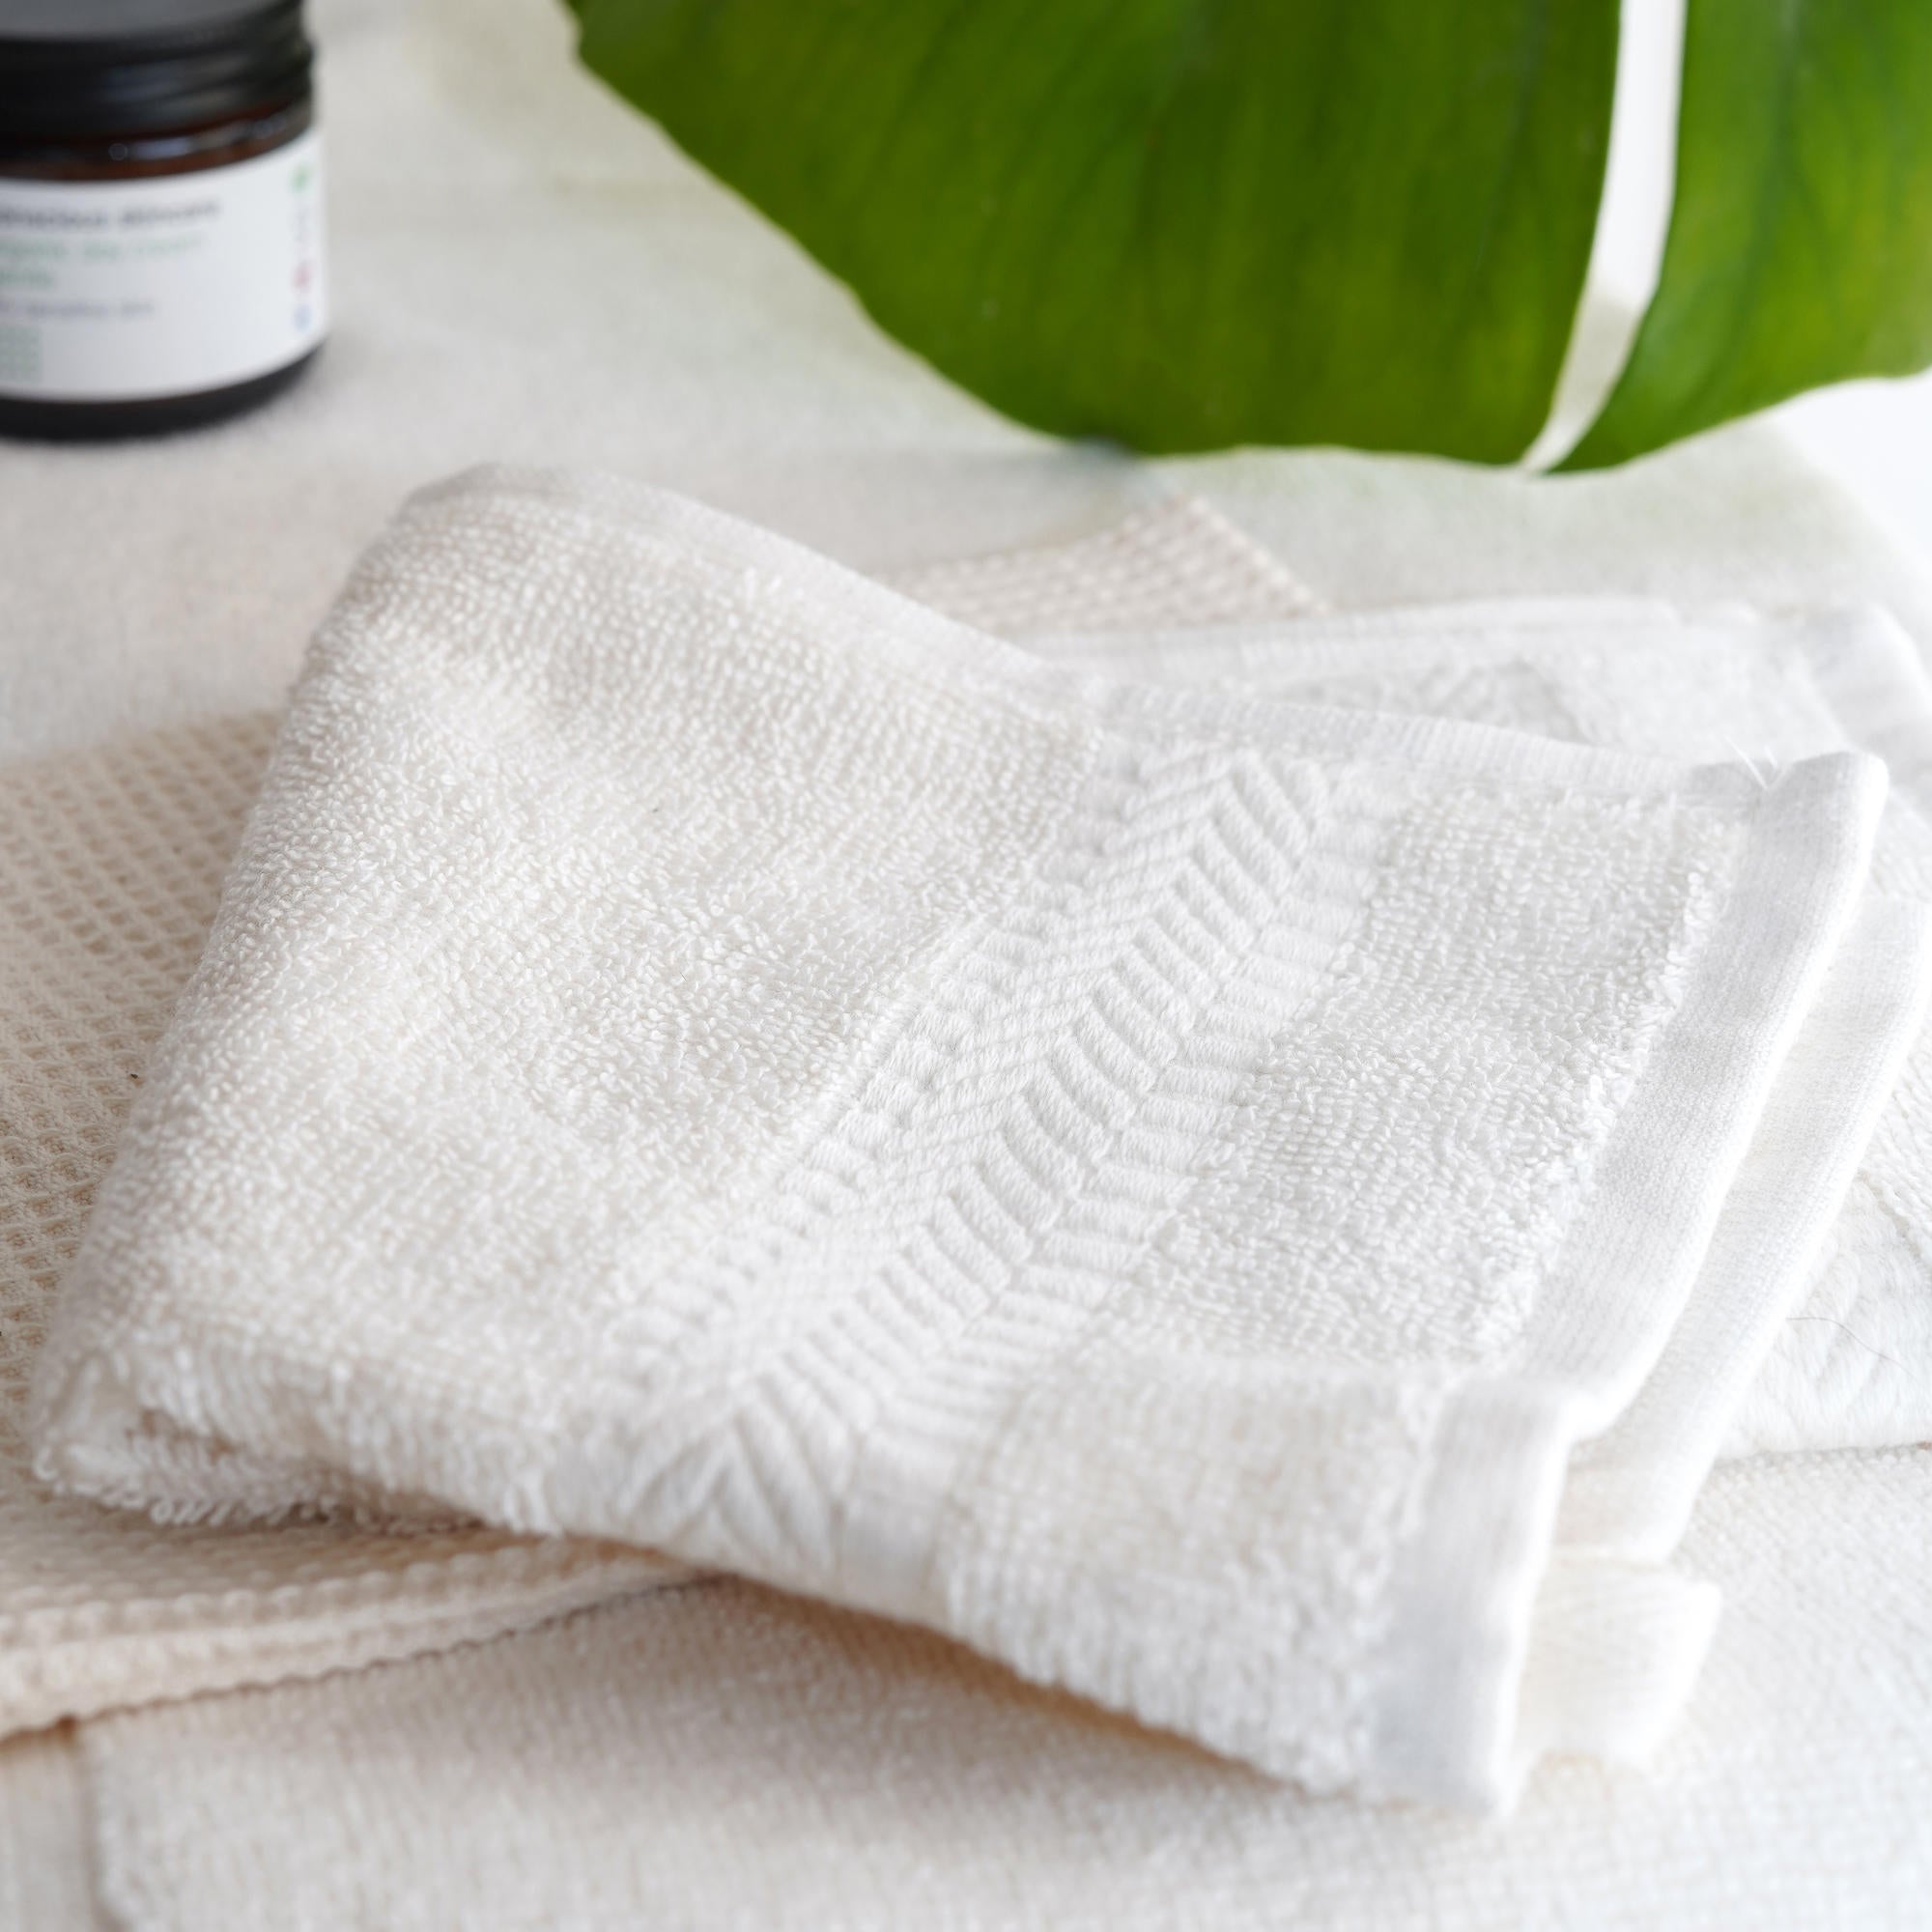 Organic Cotton Face Towels - 100% USDA Certified Organic Cotton